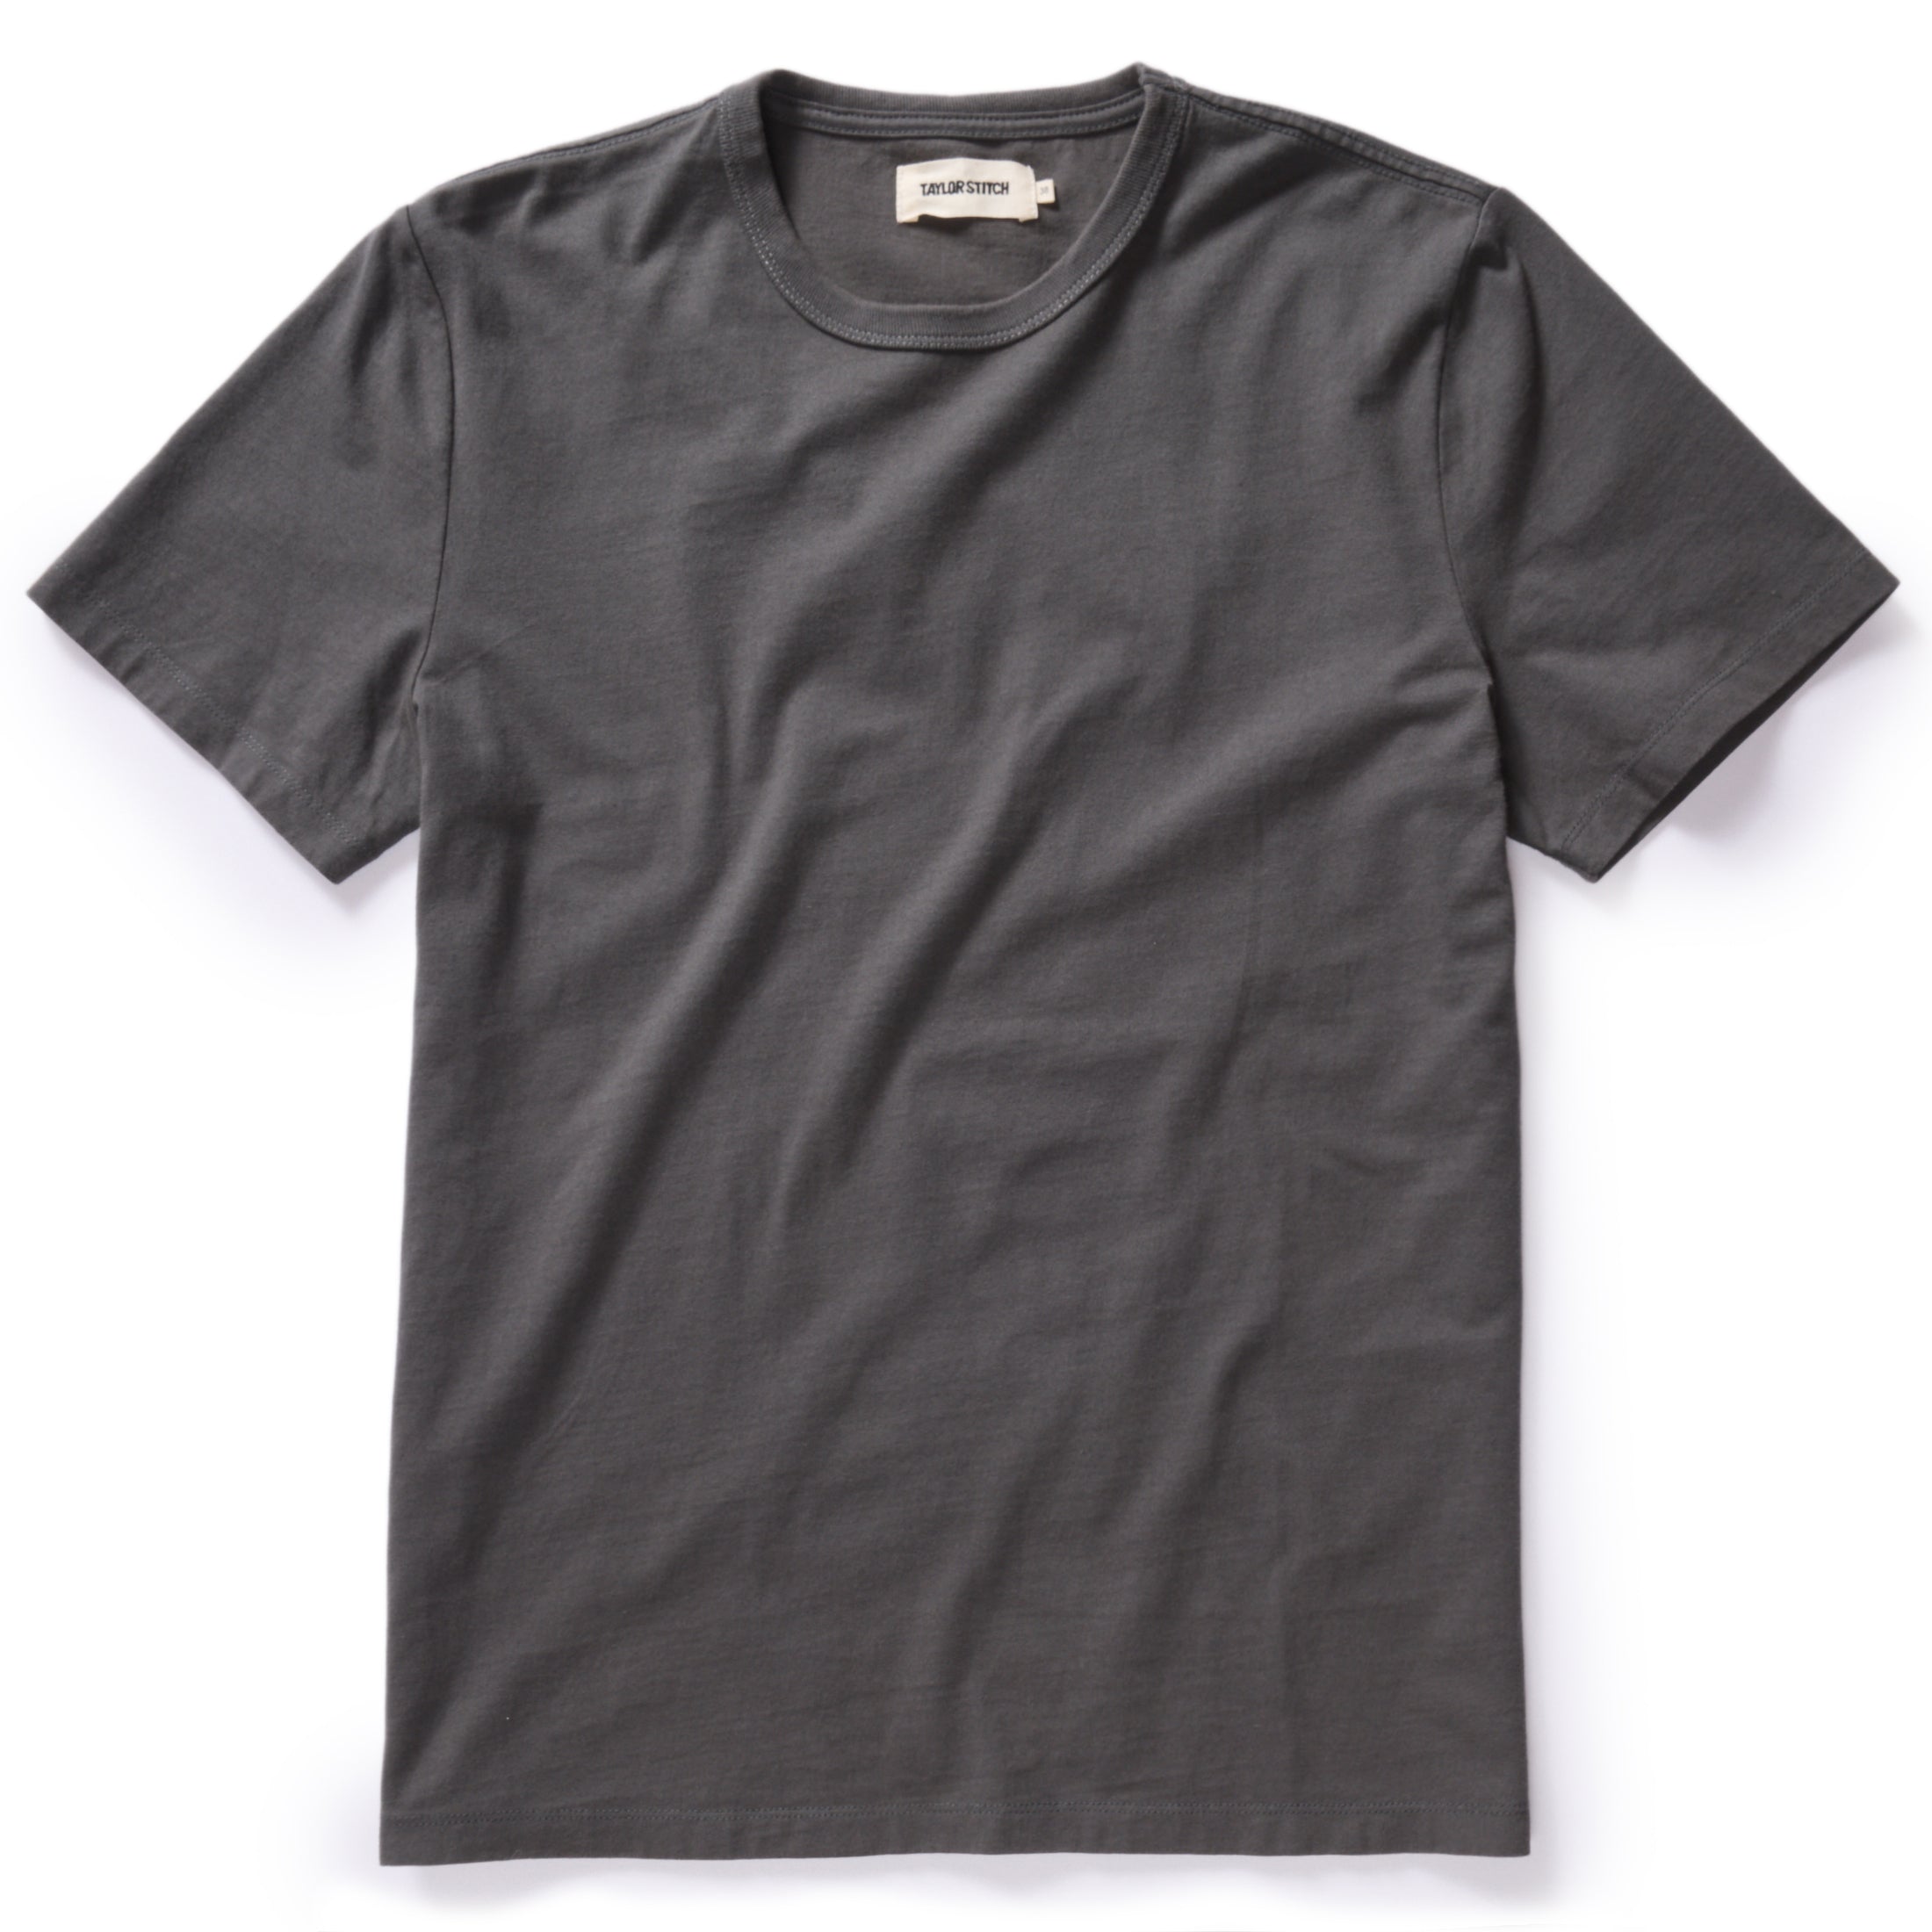 The Organic Cotton Men's T-Shirt in Faded Black | Men's T-Shirts ...